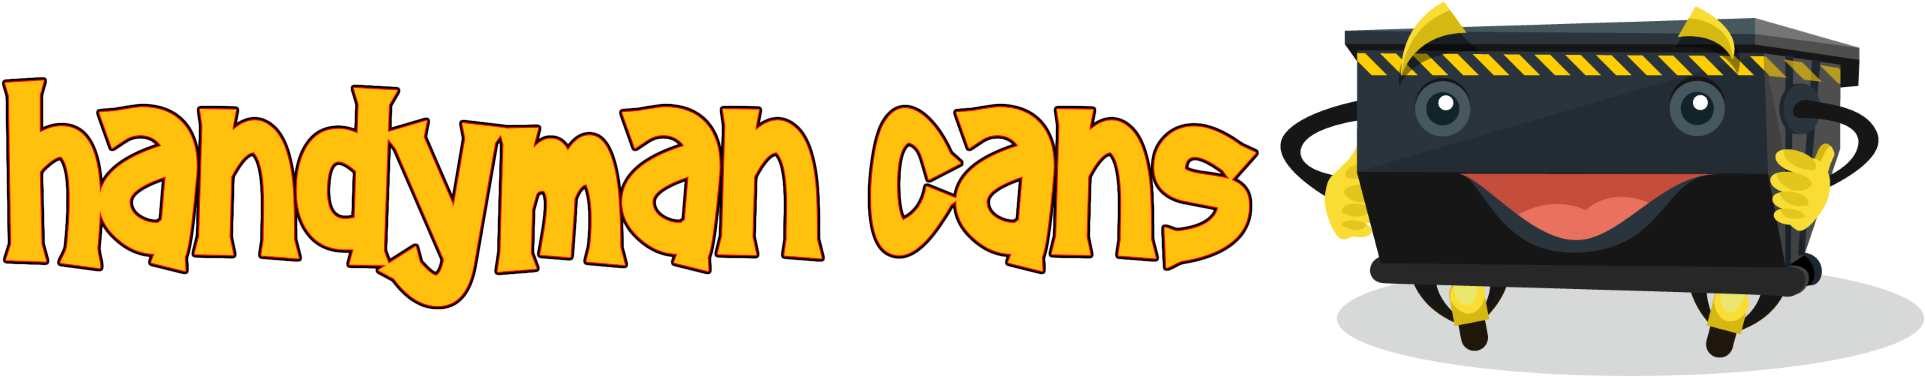 Handyman Cans Animated Logo PNG image